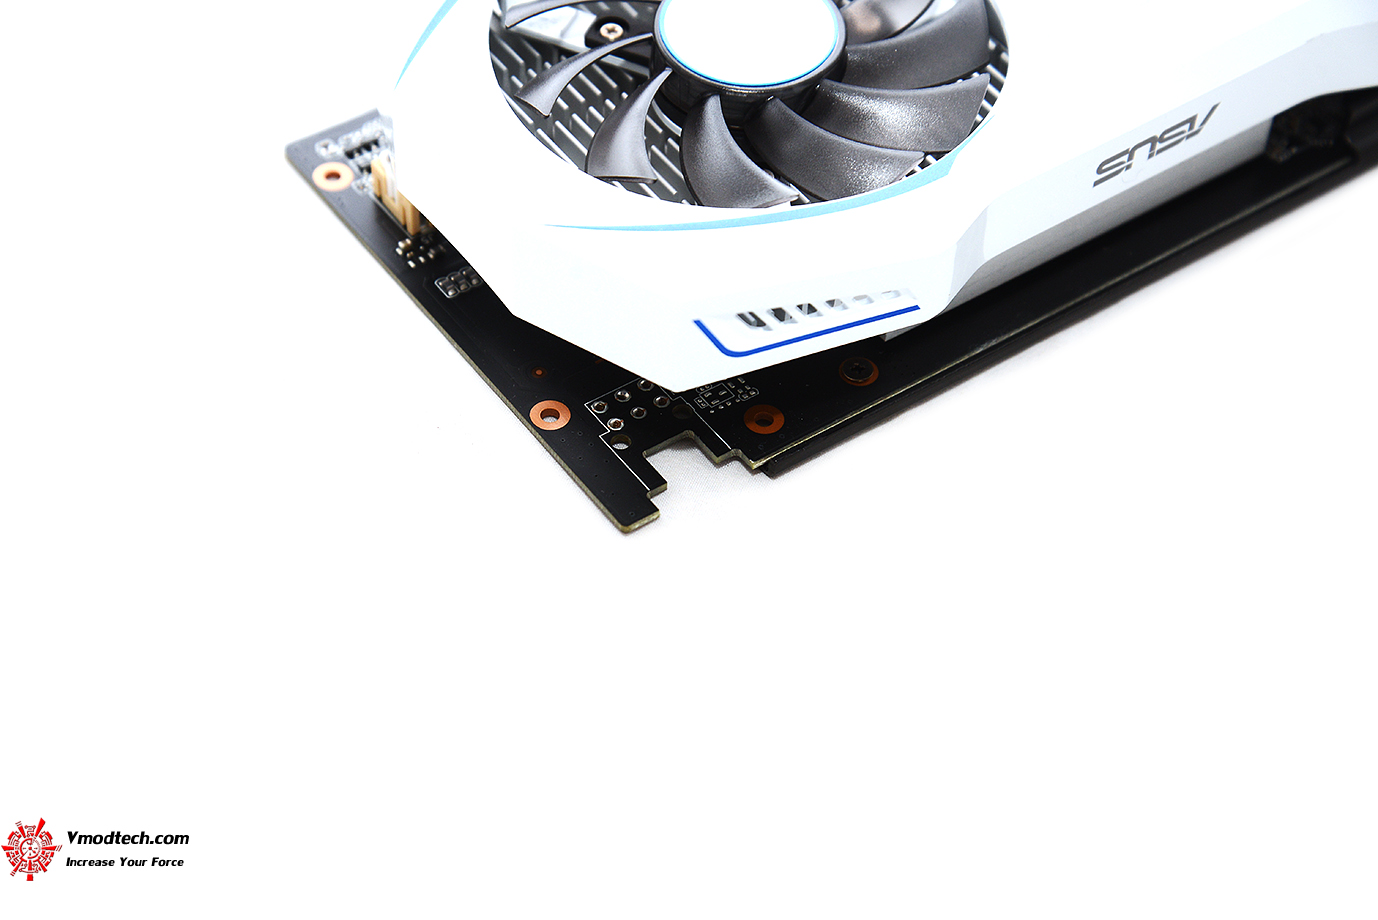 dsc 8857 ASUS GeForce GTX 1050 2GB Dual fan Edition Review